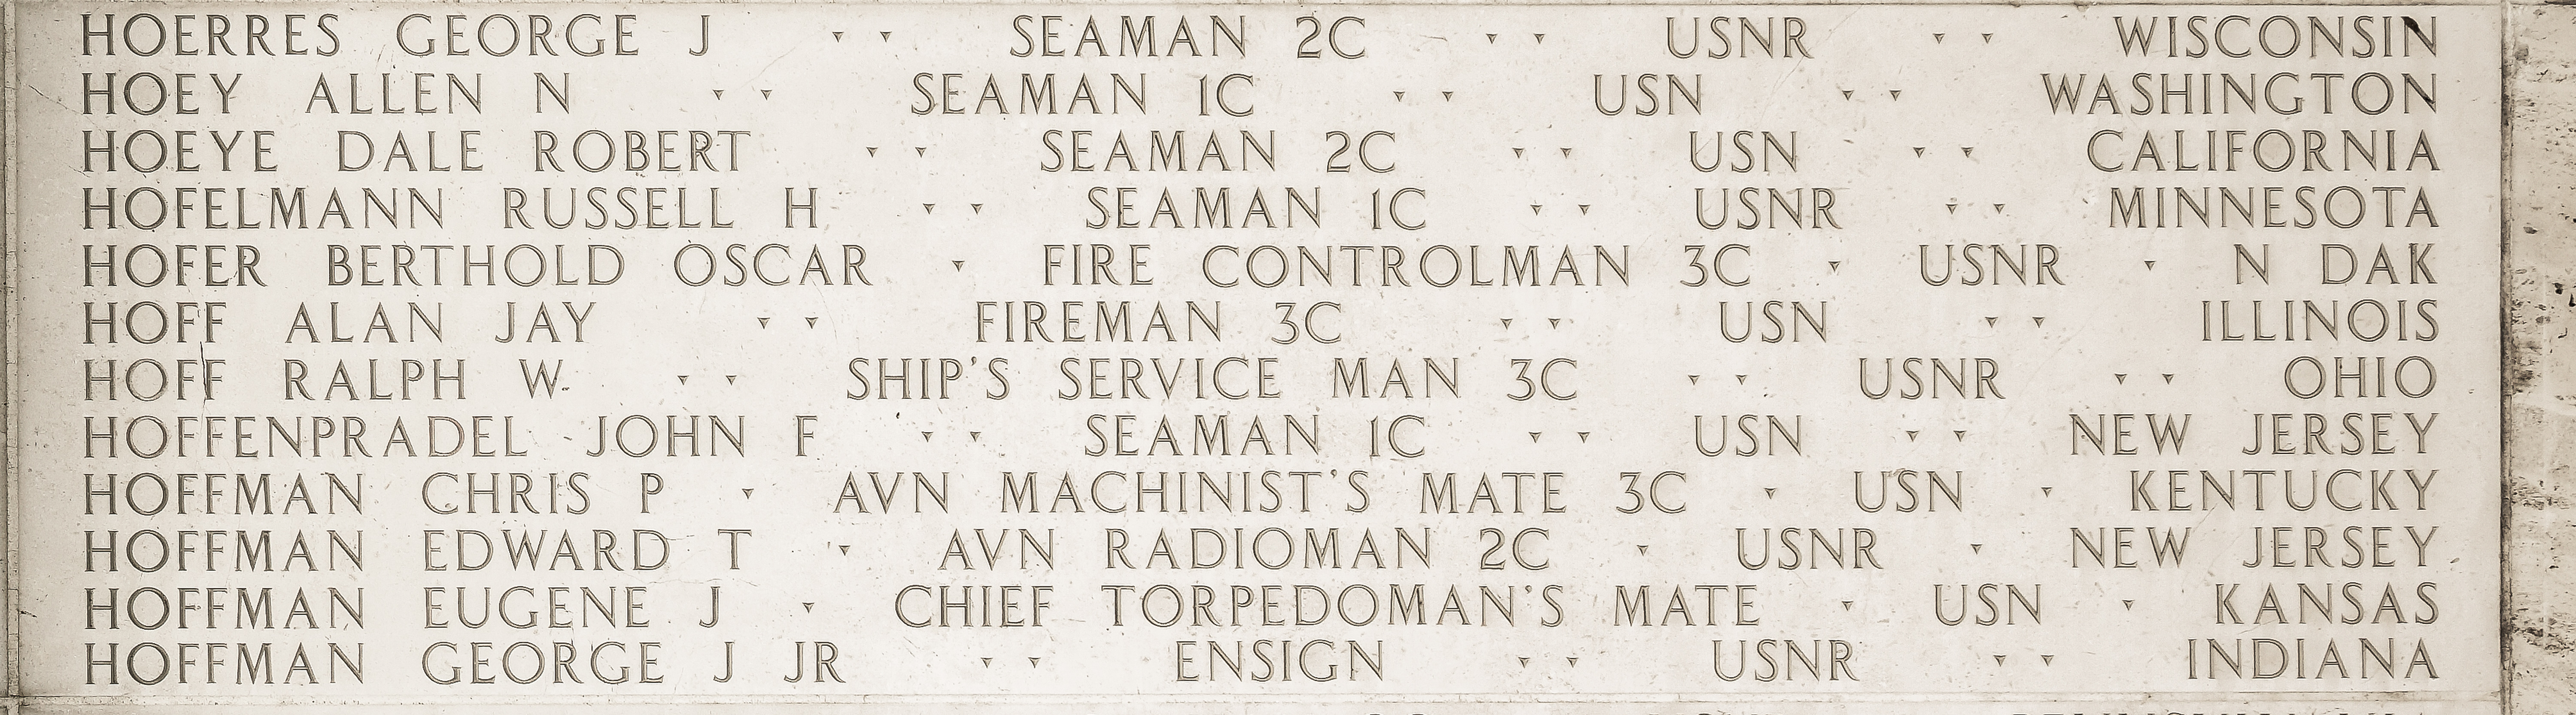 Edward T. Hoffman, Aviation Radioman Second Class